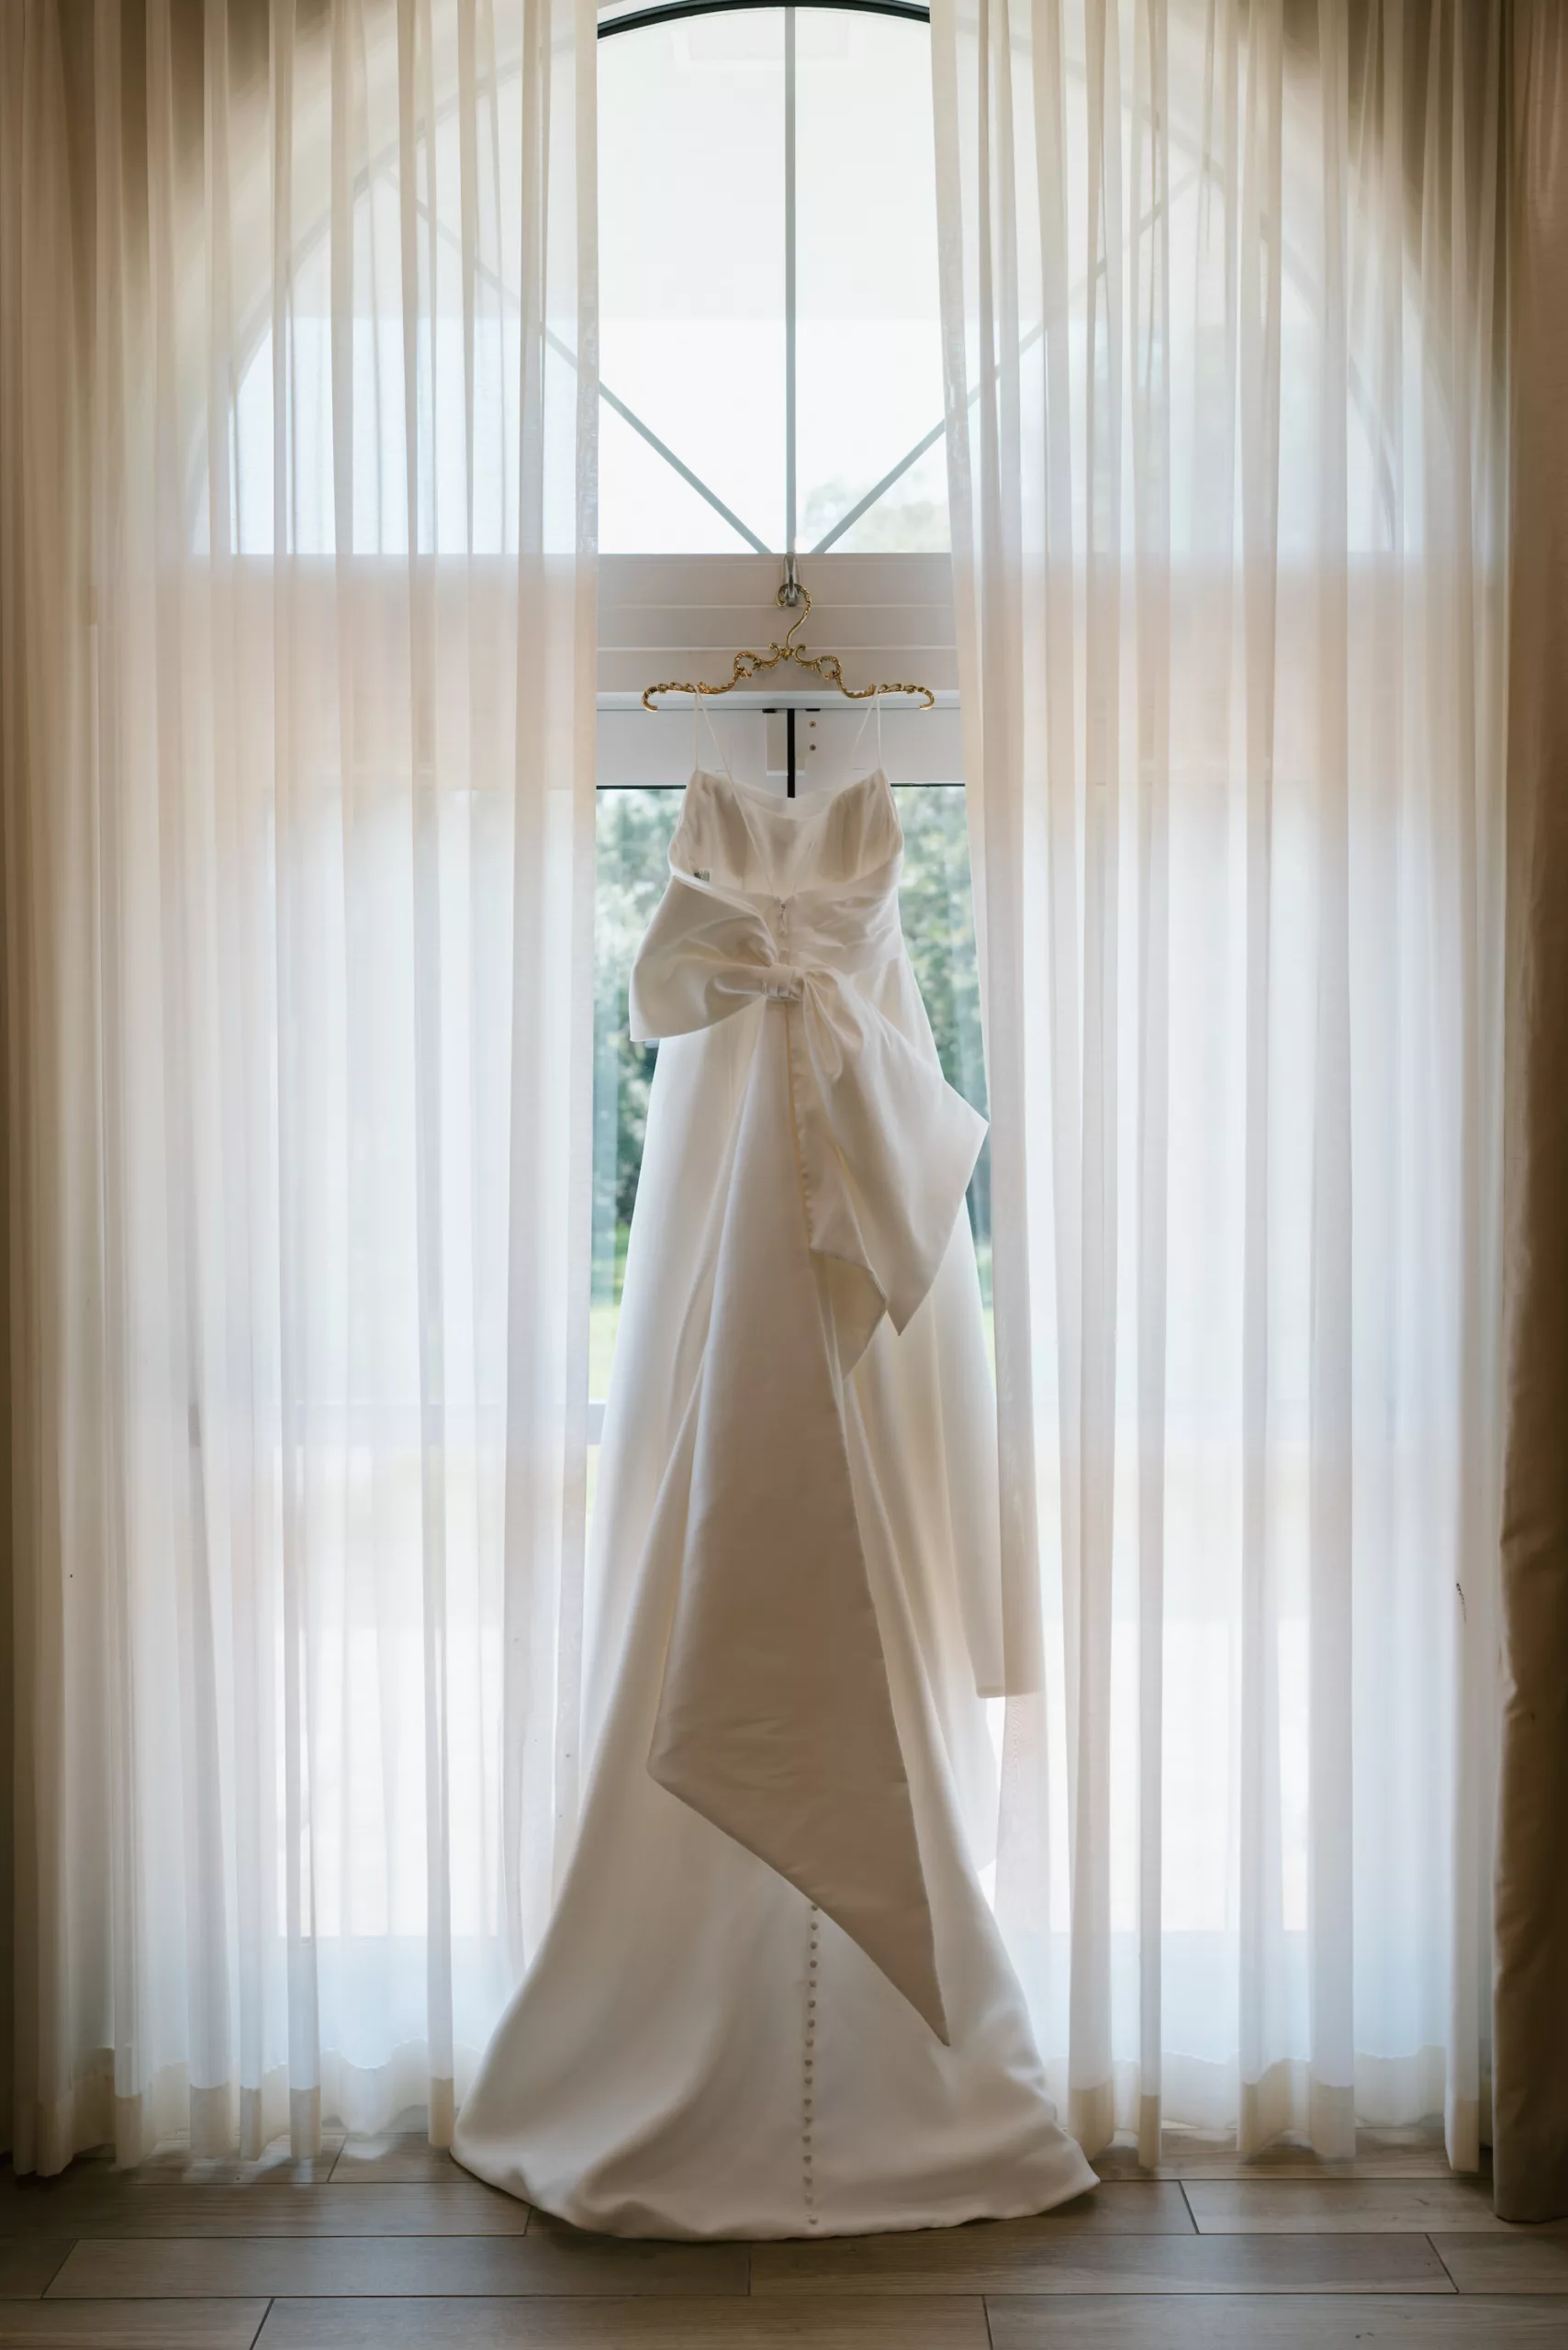 Romantic White Satin A Line Wedding Ballgown Dress with Bow Inspiration